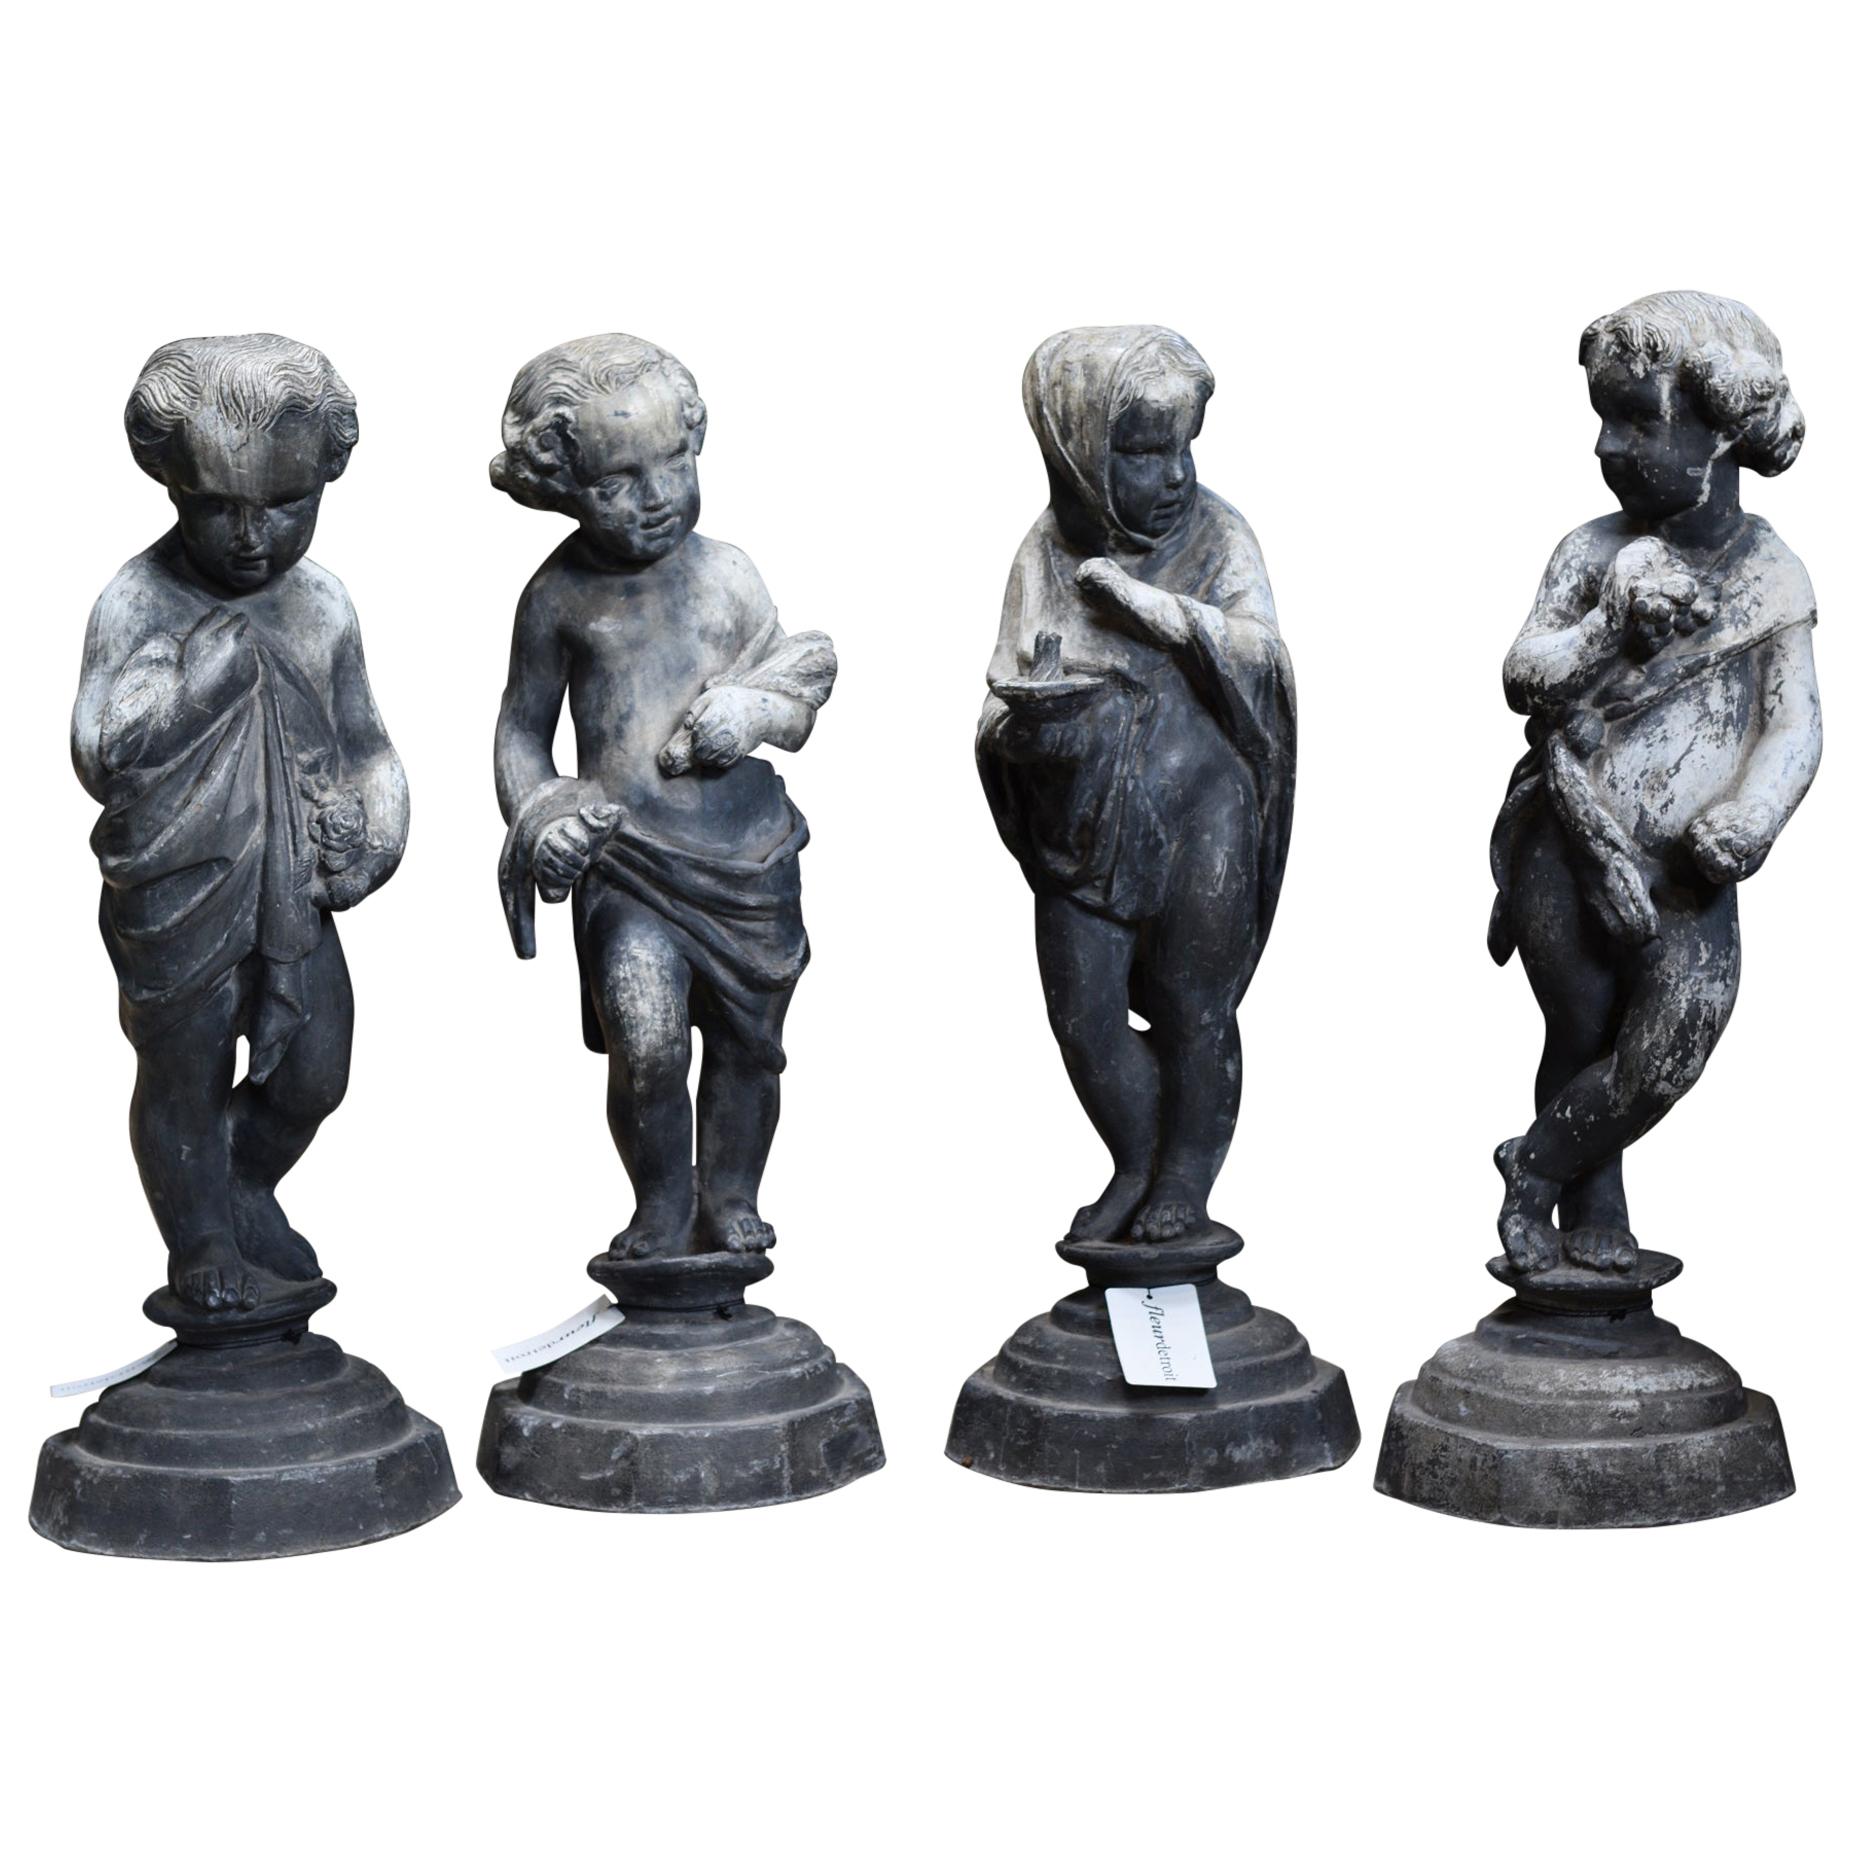 19th Century Lead Statues, Four Seasons